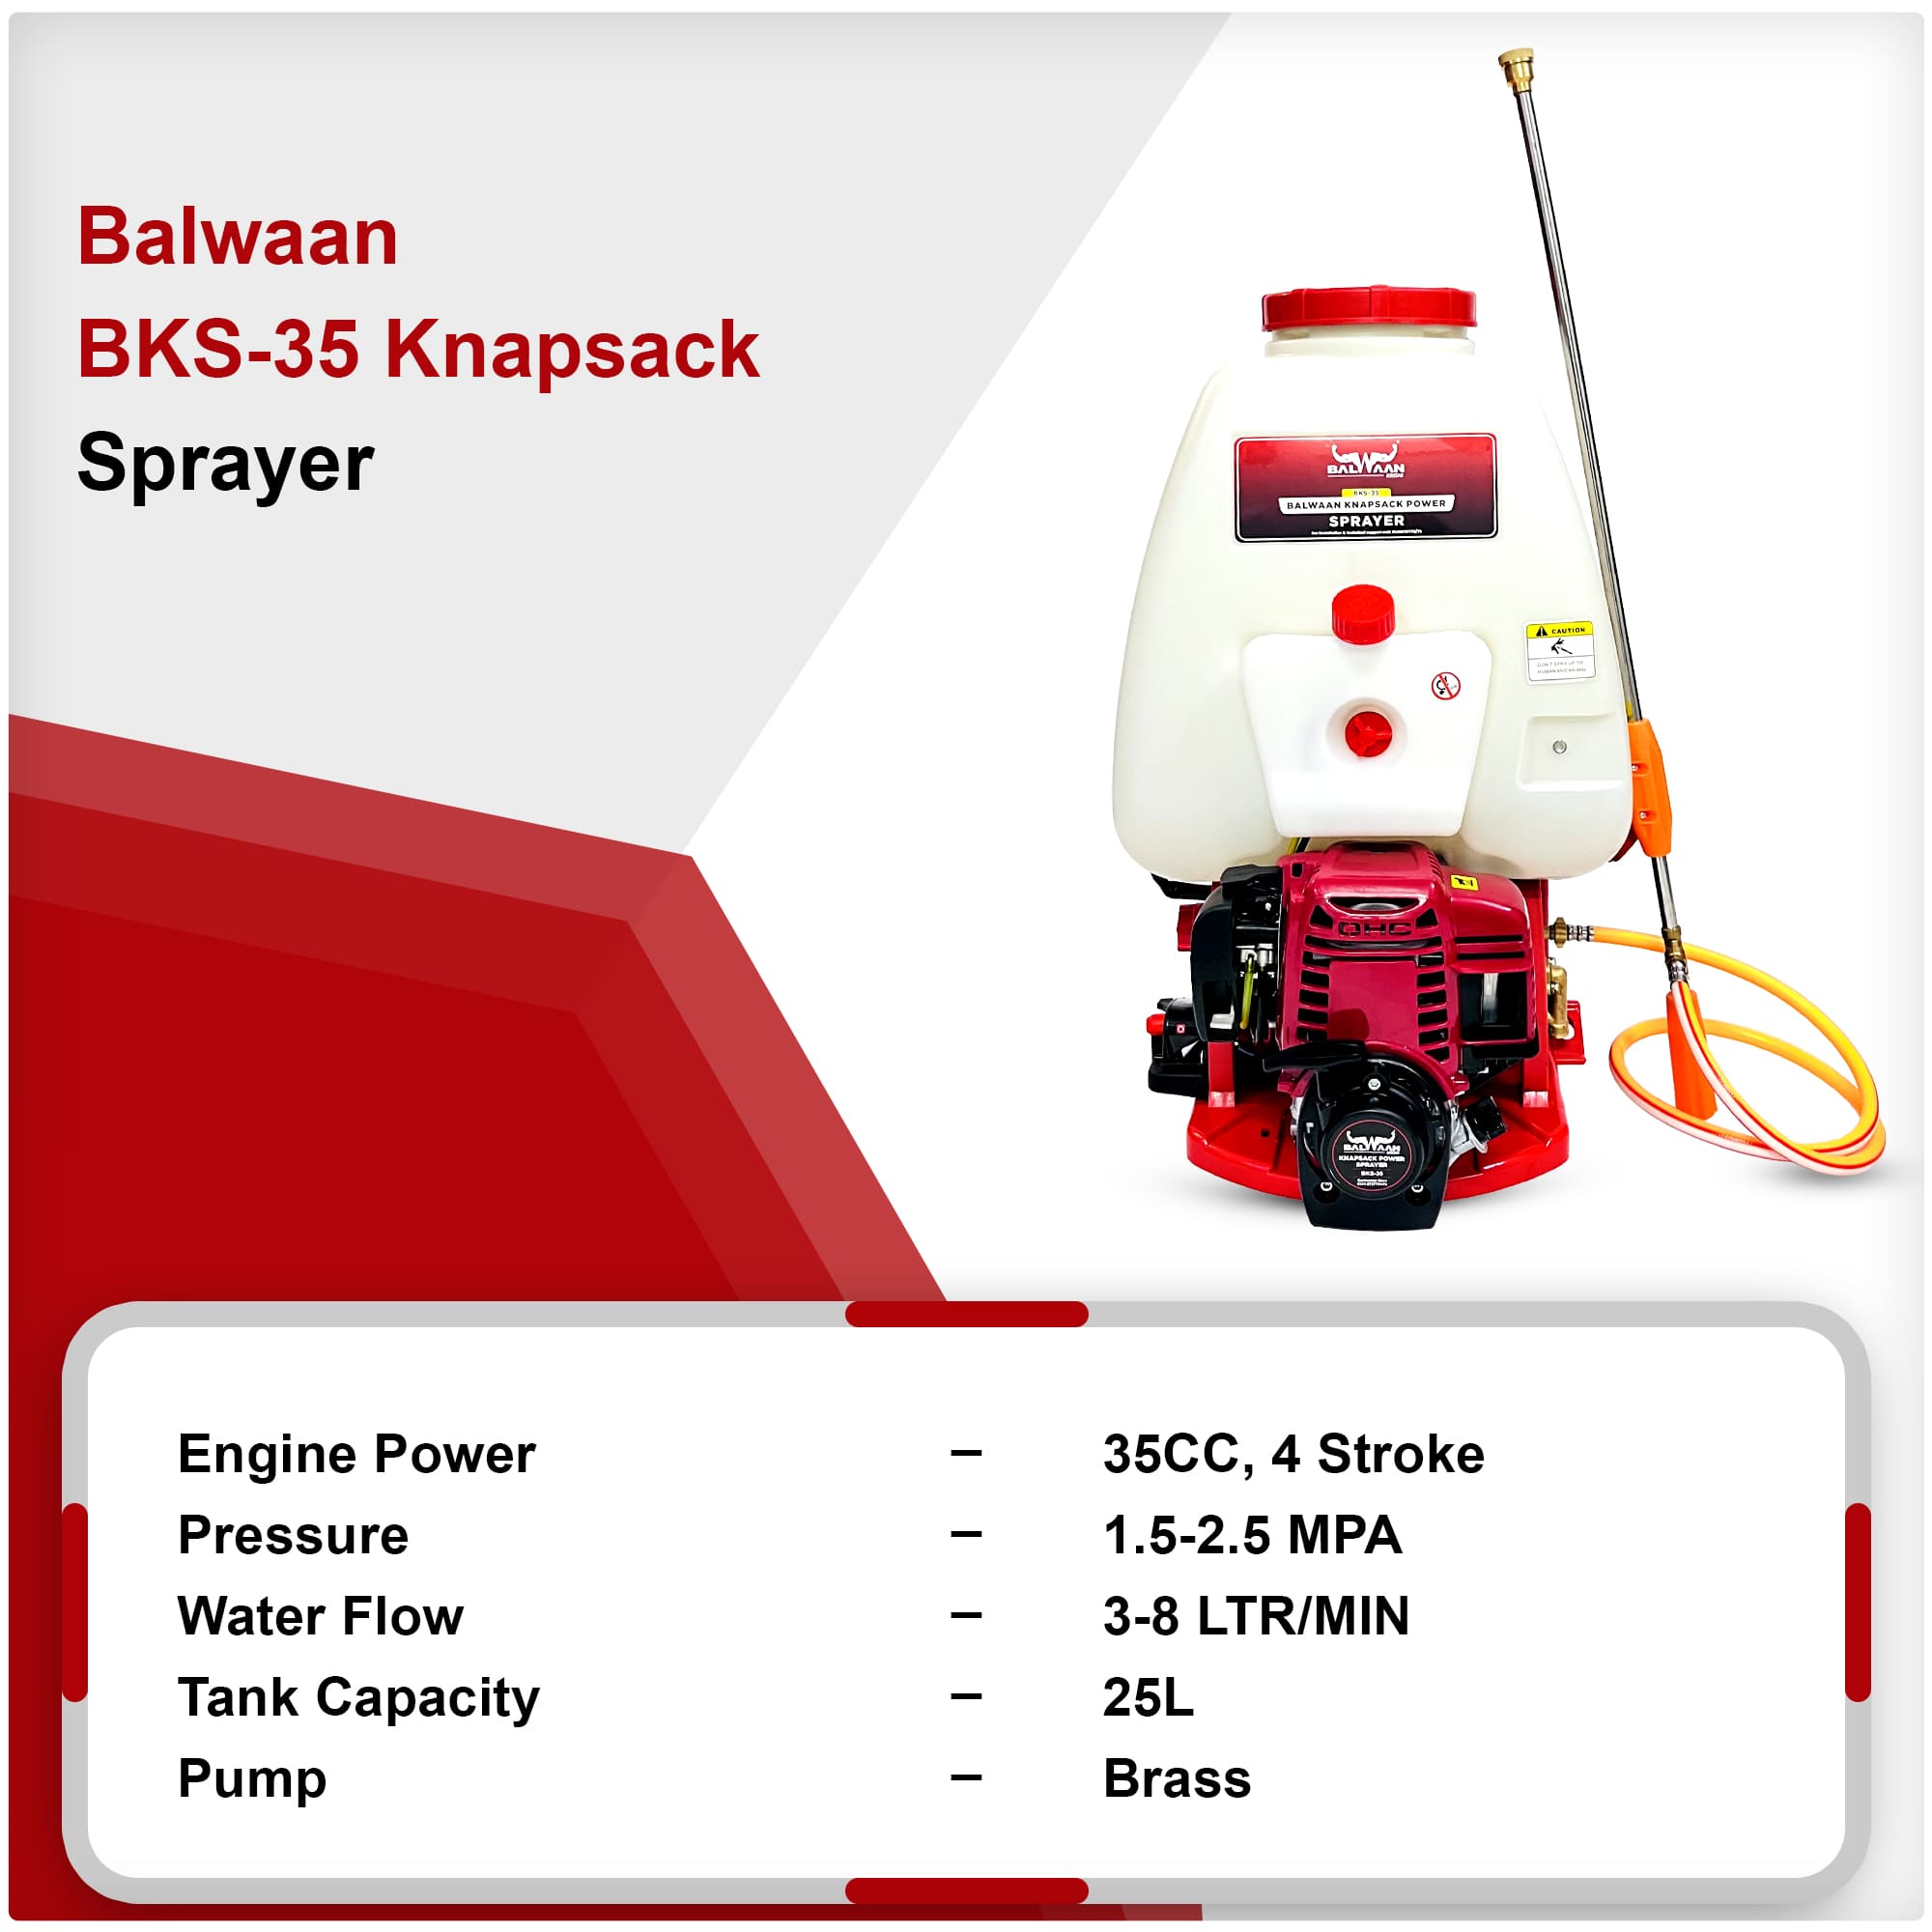 Balwaan Knapsack Agricultural Power Sprayer (BKS-35)